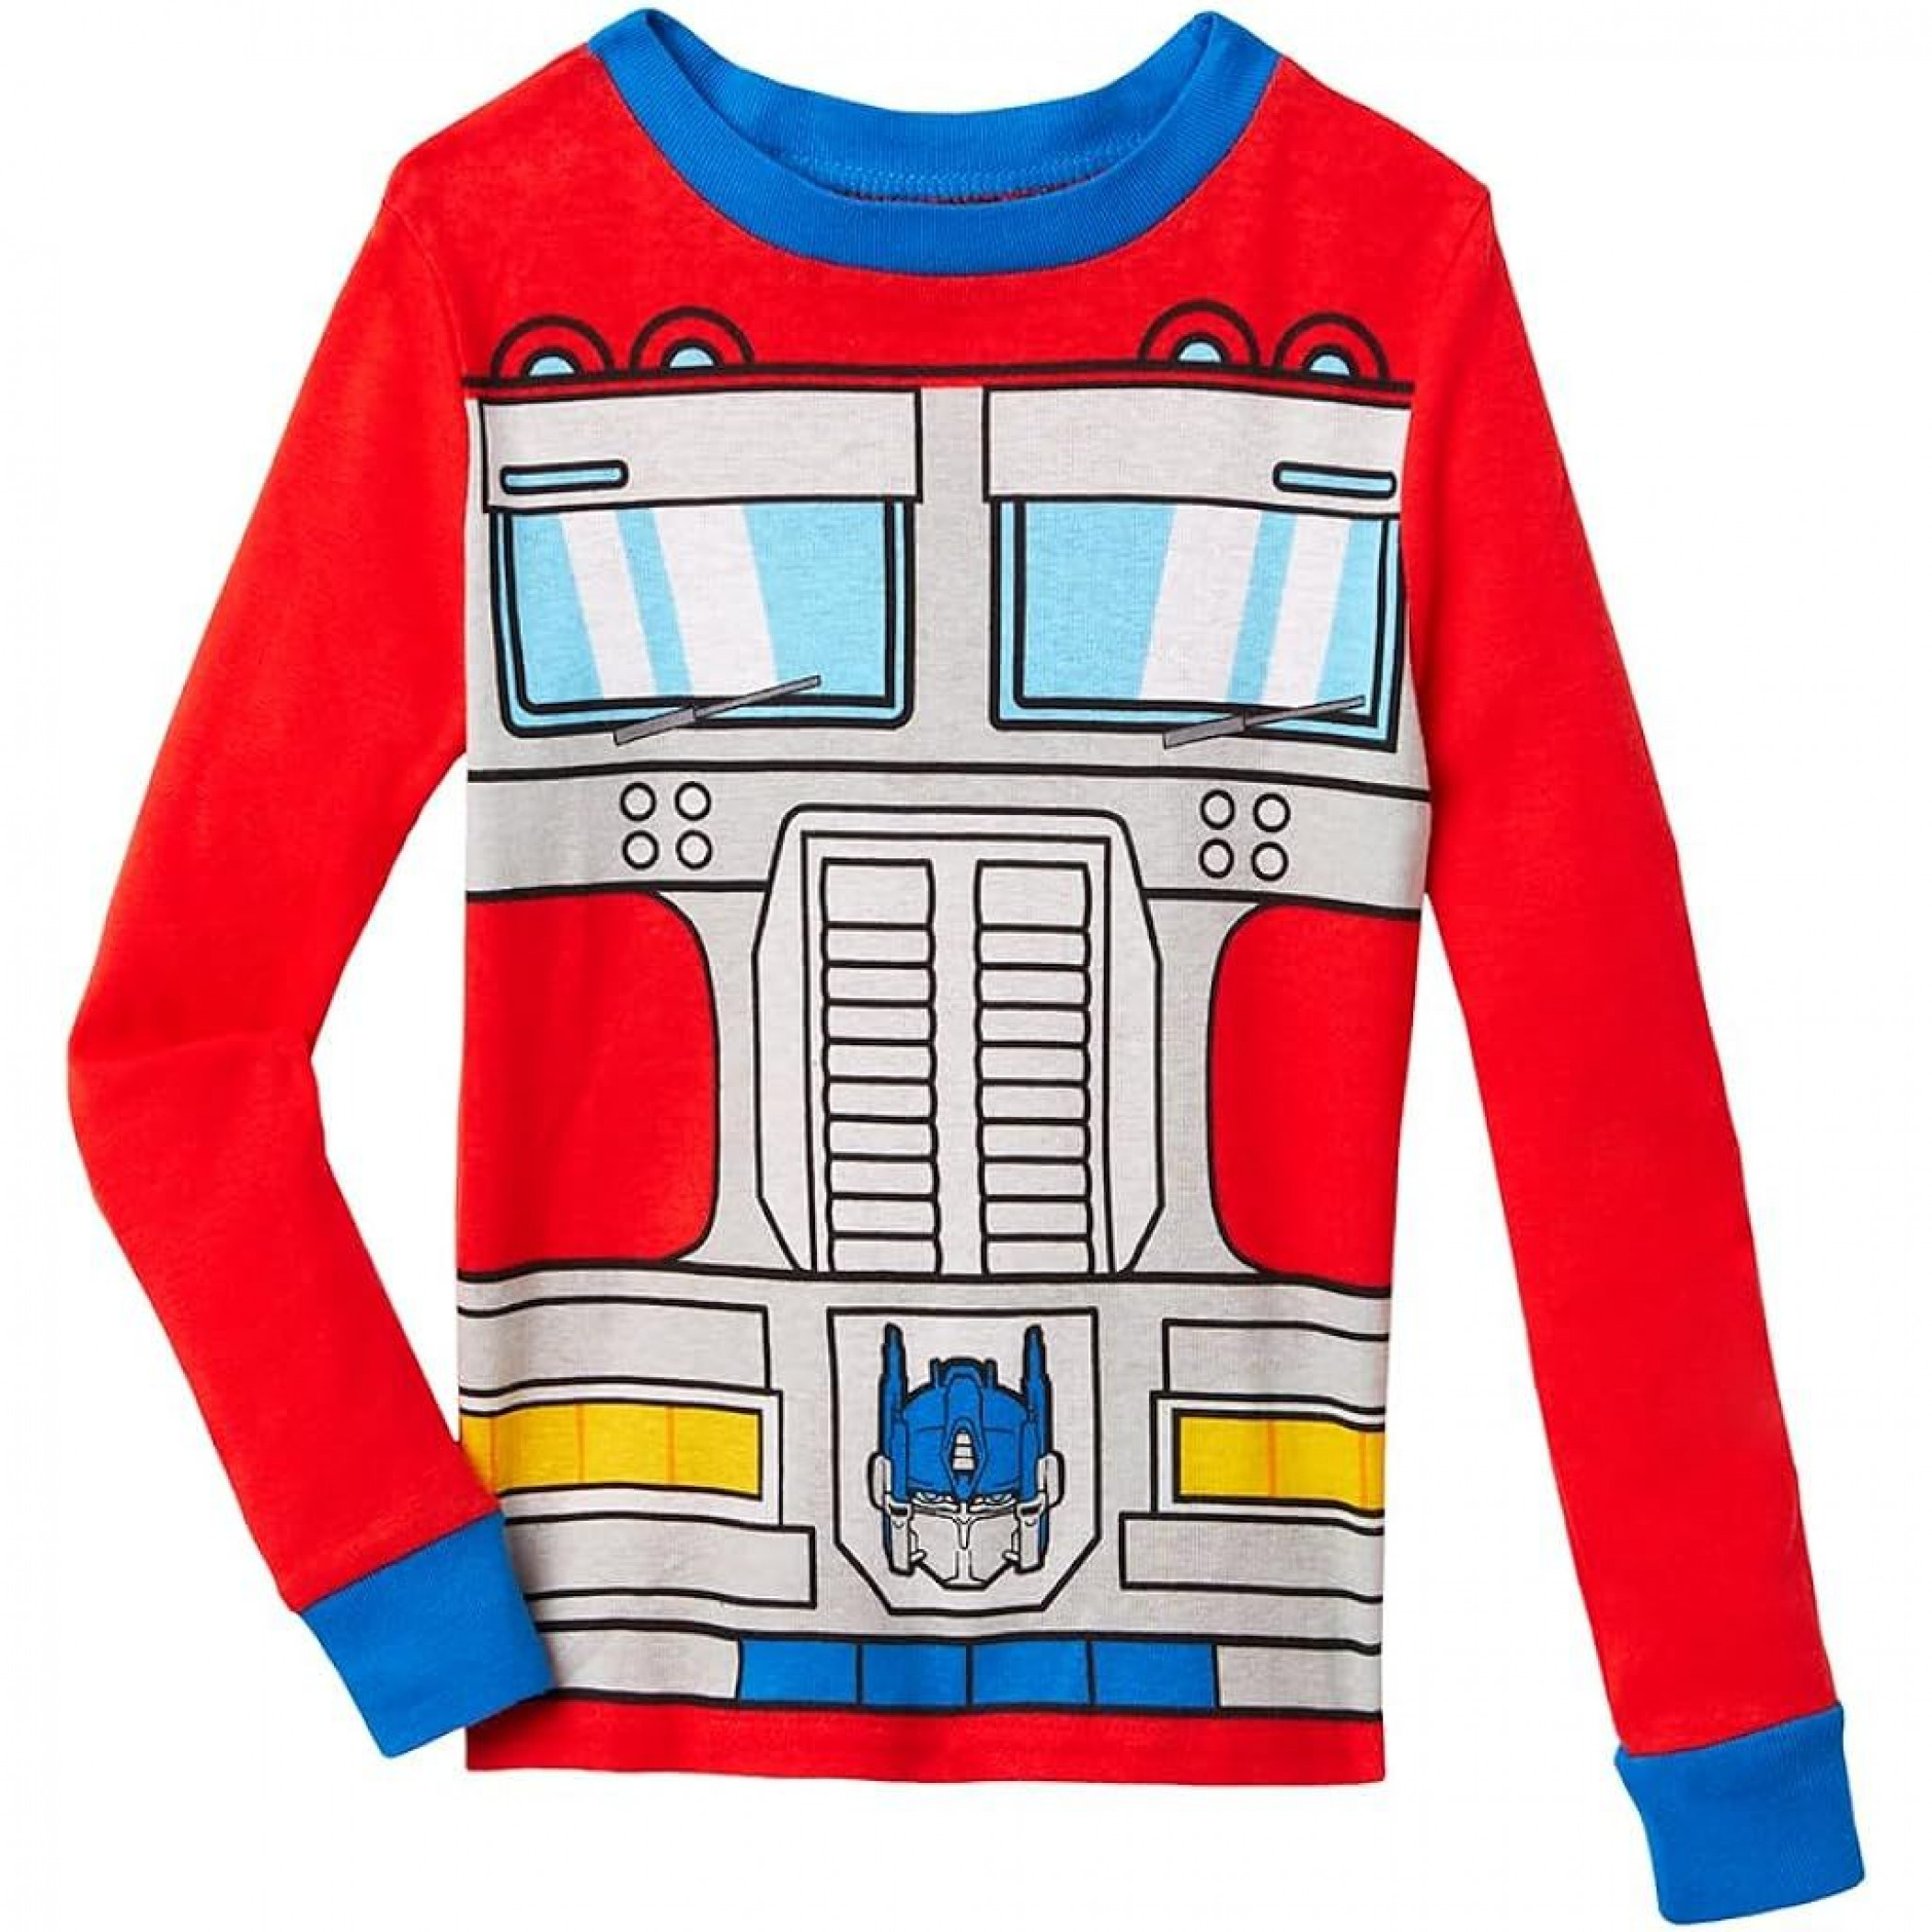 Transformers Bumblebee and Optimus Prime Boy's 4-Piece Pajama Set